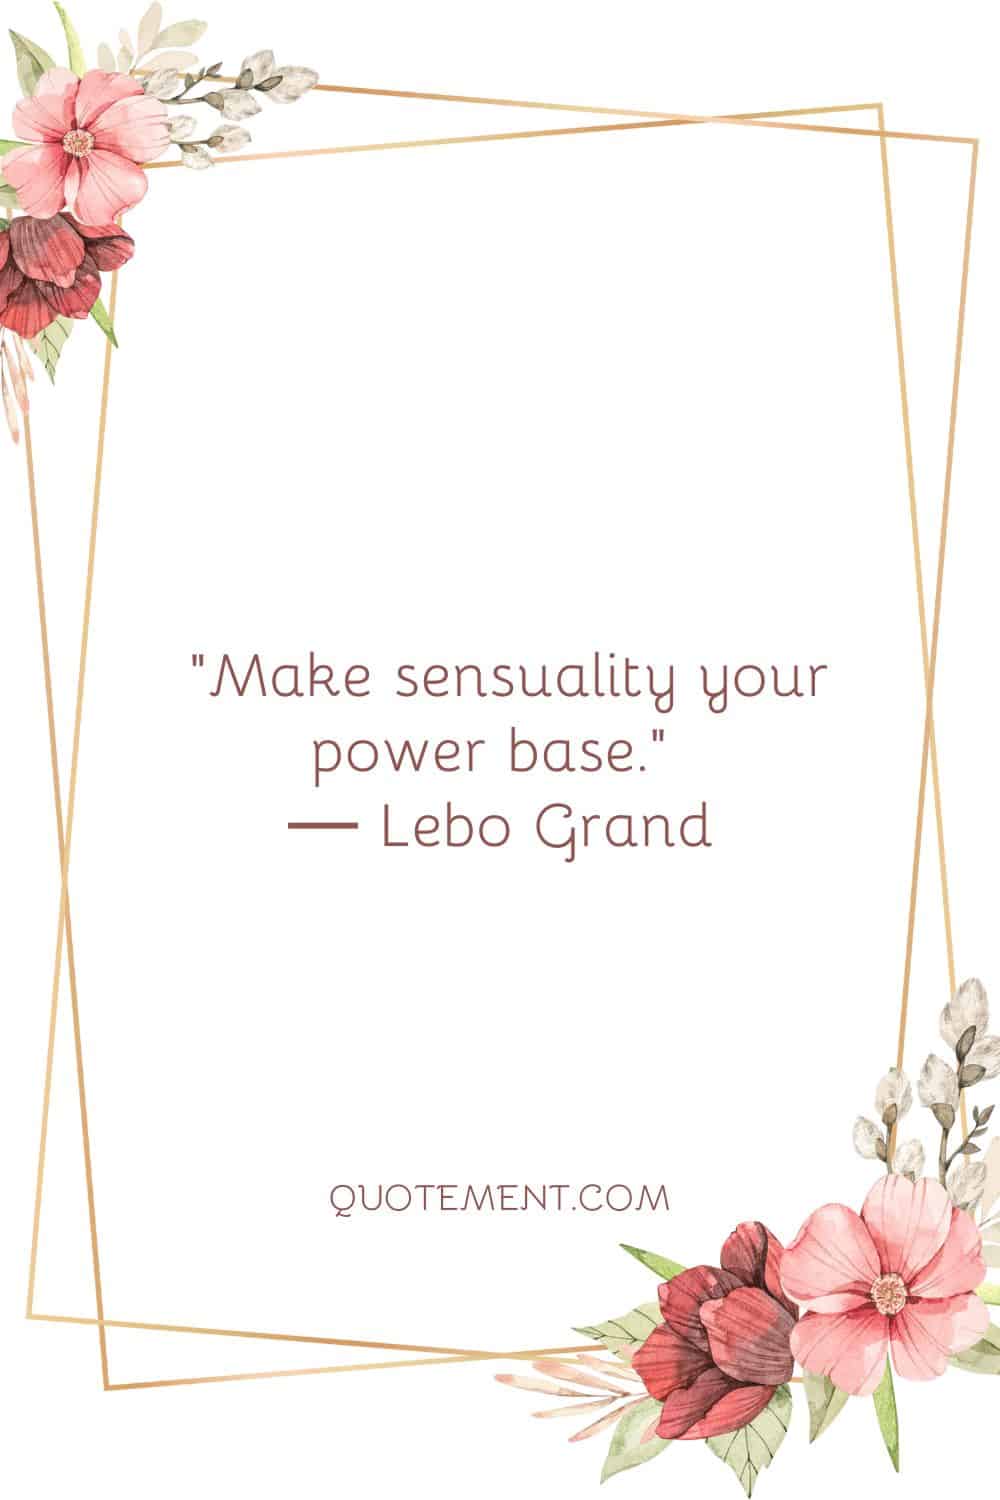 Make sensuality your power base